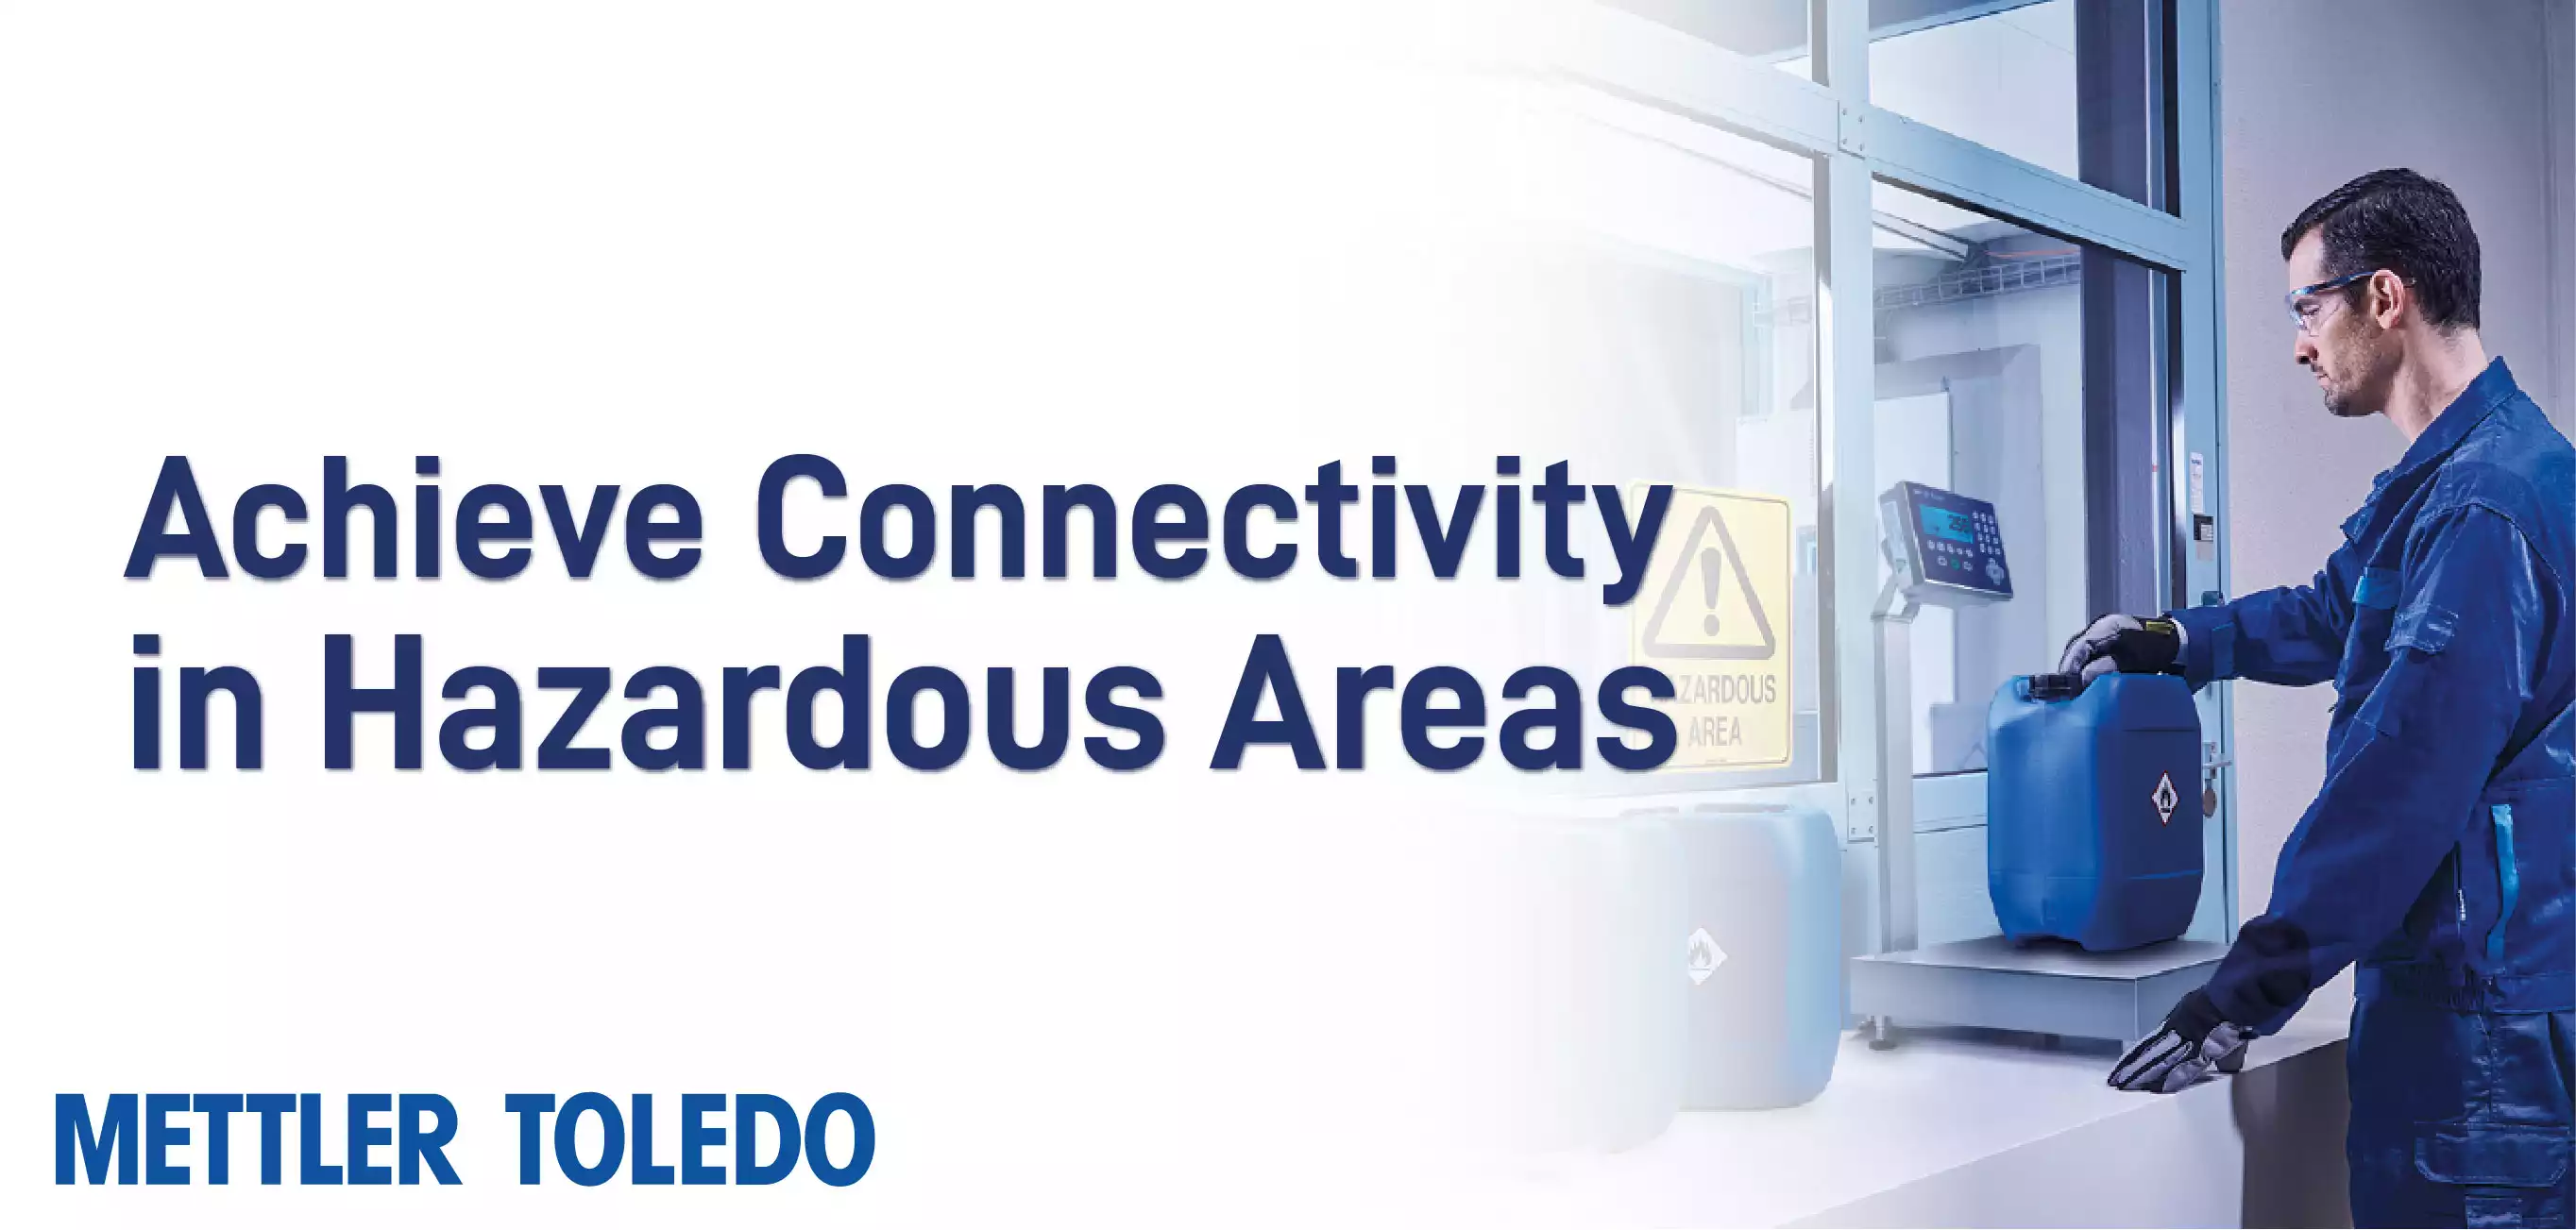 Achieve Connectivity in Hazardous Areas by Mettler Toledo.